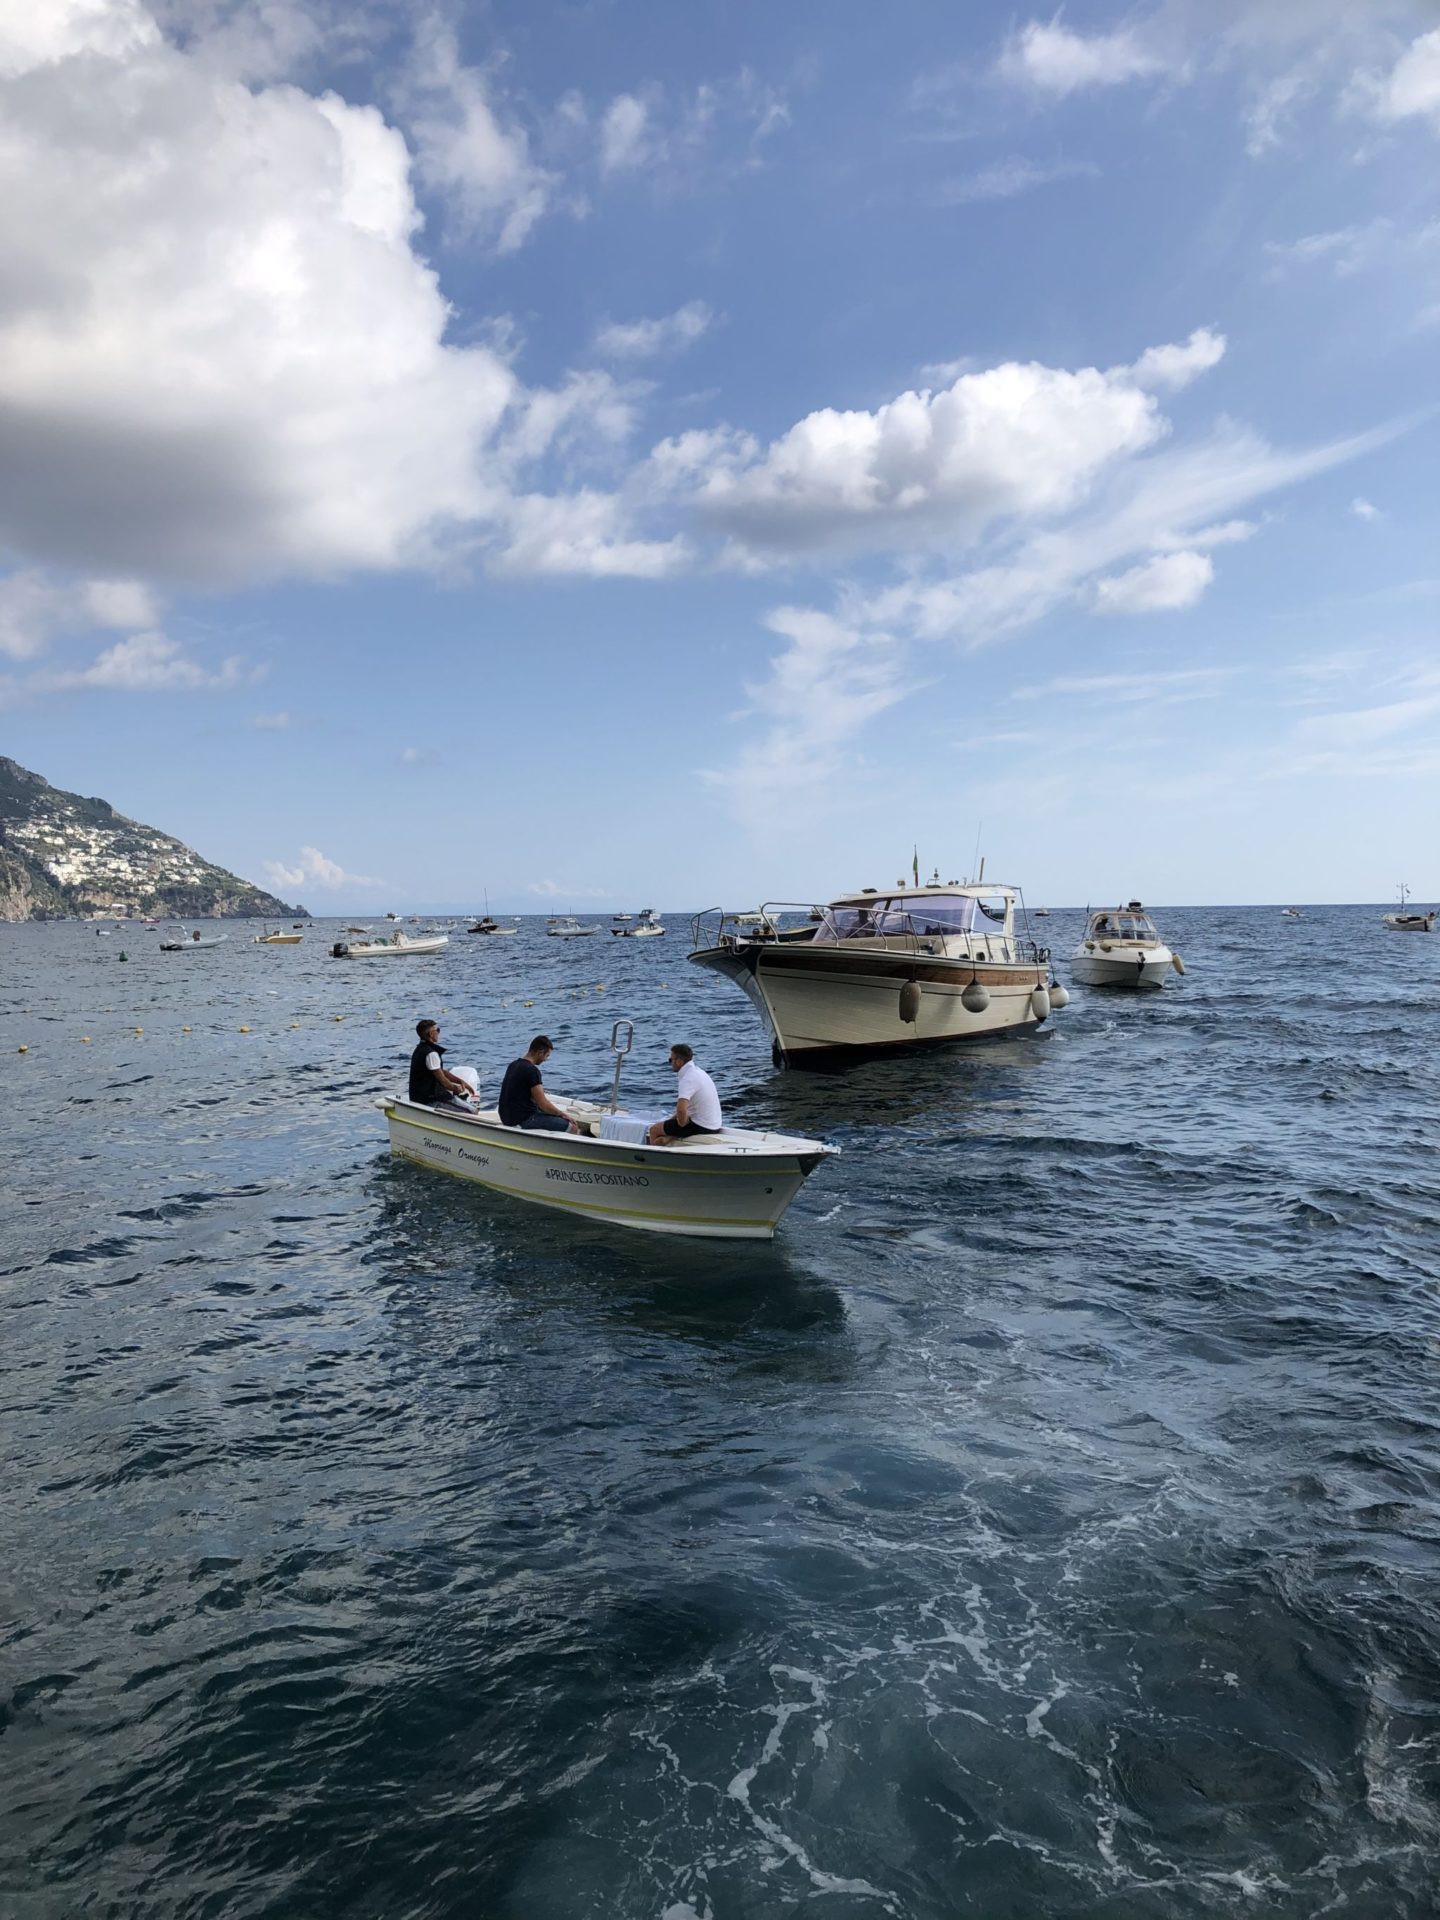 positano amalfi coast italy itinerary – where to eat, transportation melanie marie indrewsshoes.com